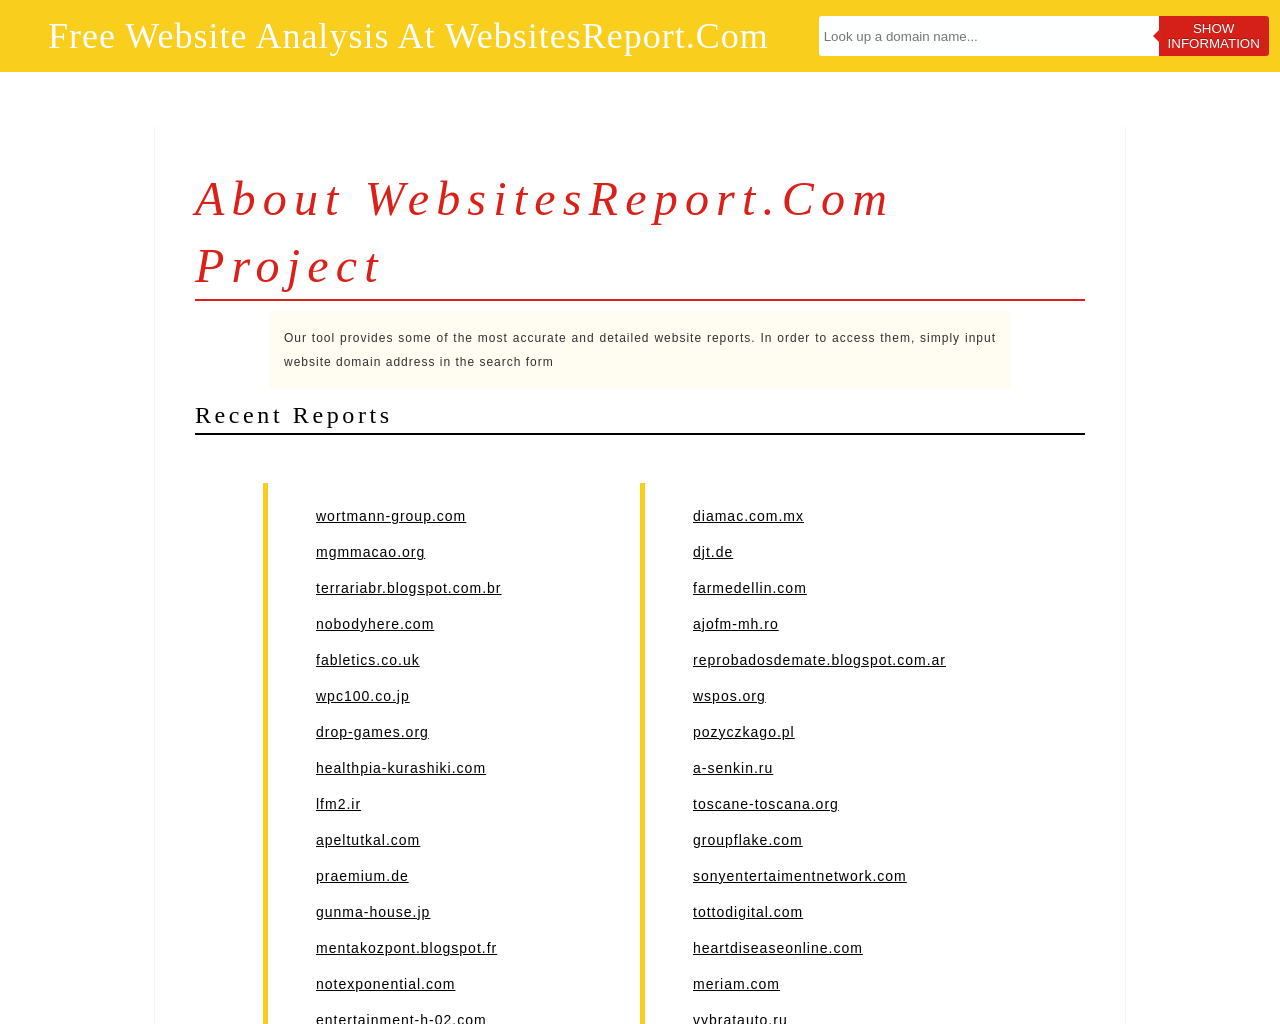 websitesreport.com